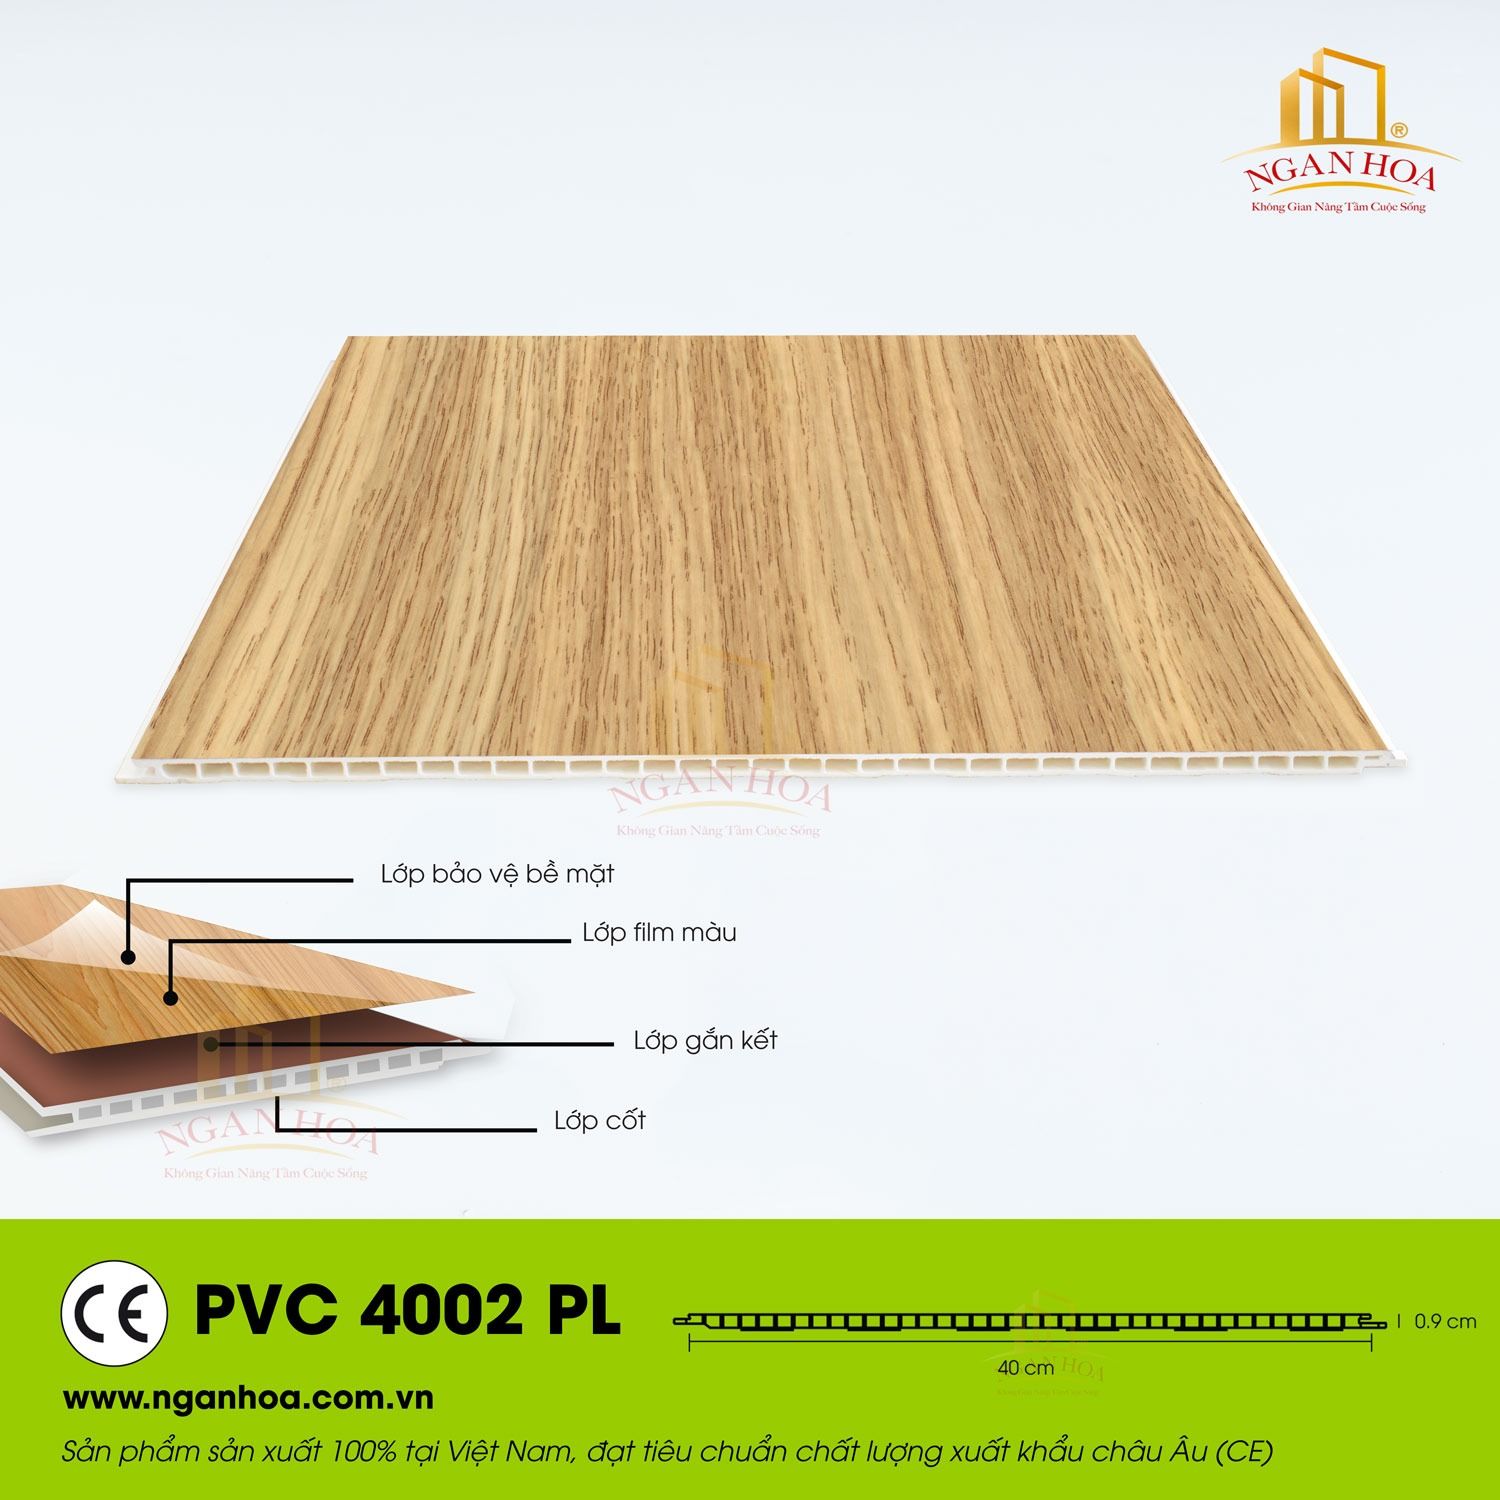 PVC-4002-PL